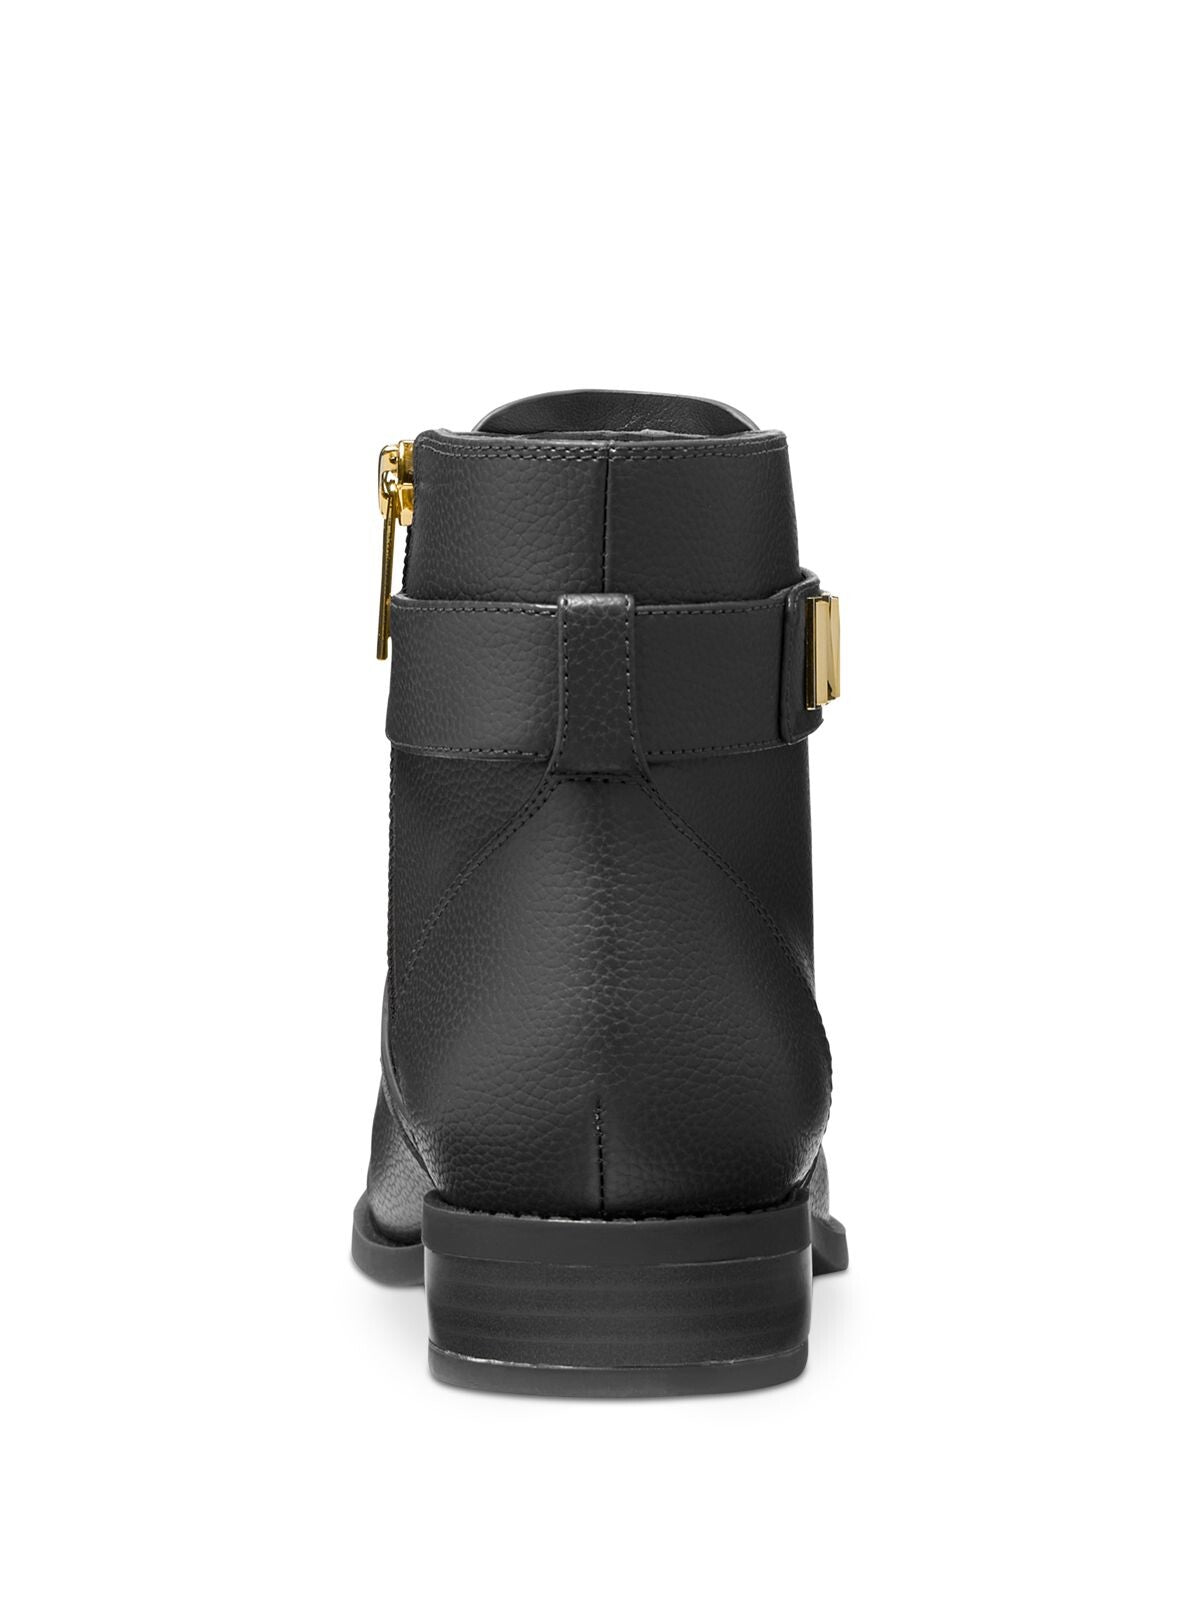 MICHAEL KORS Womens Black Padded Logo Jilly Almond Toe Block Heel Zip-Up Booties 6.5 M